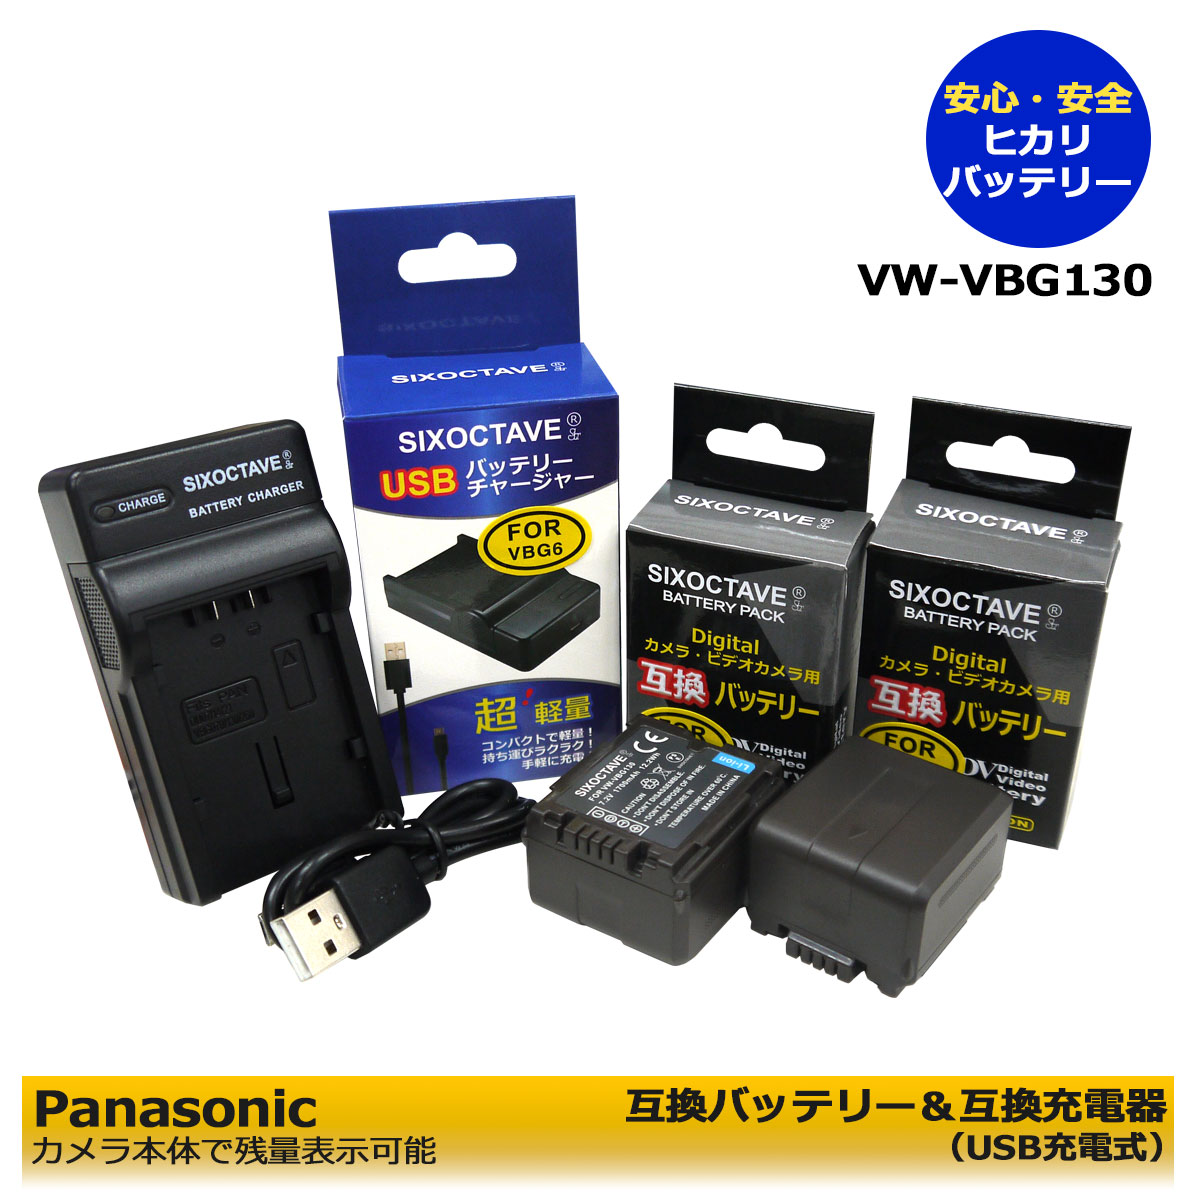 VW-VBG130-K　Panasonic【あす楽対応】互